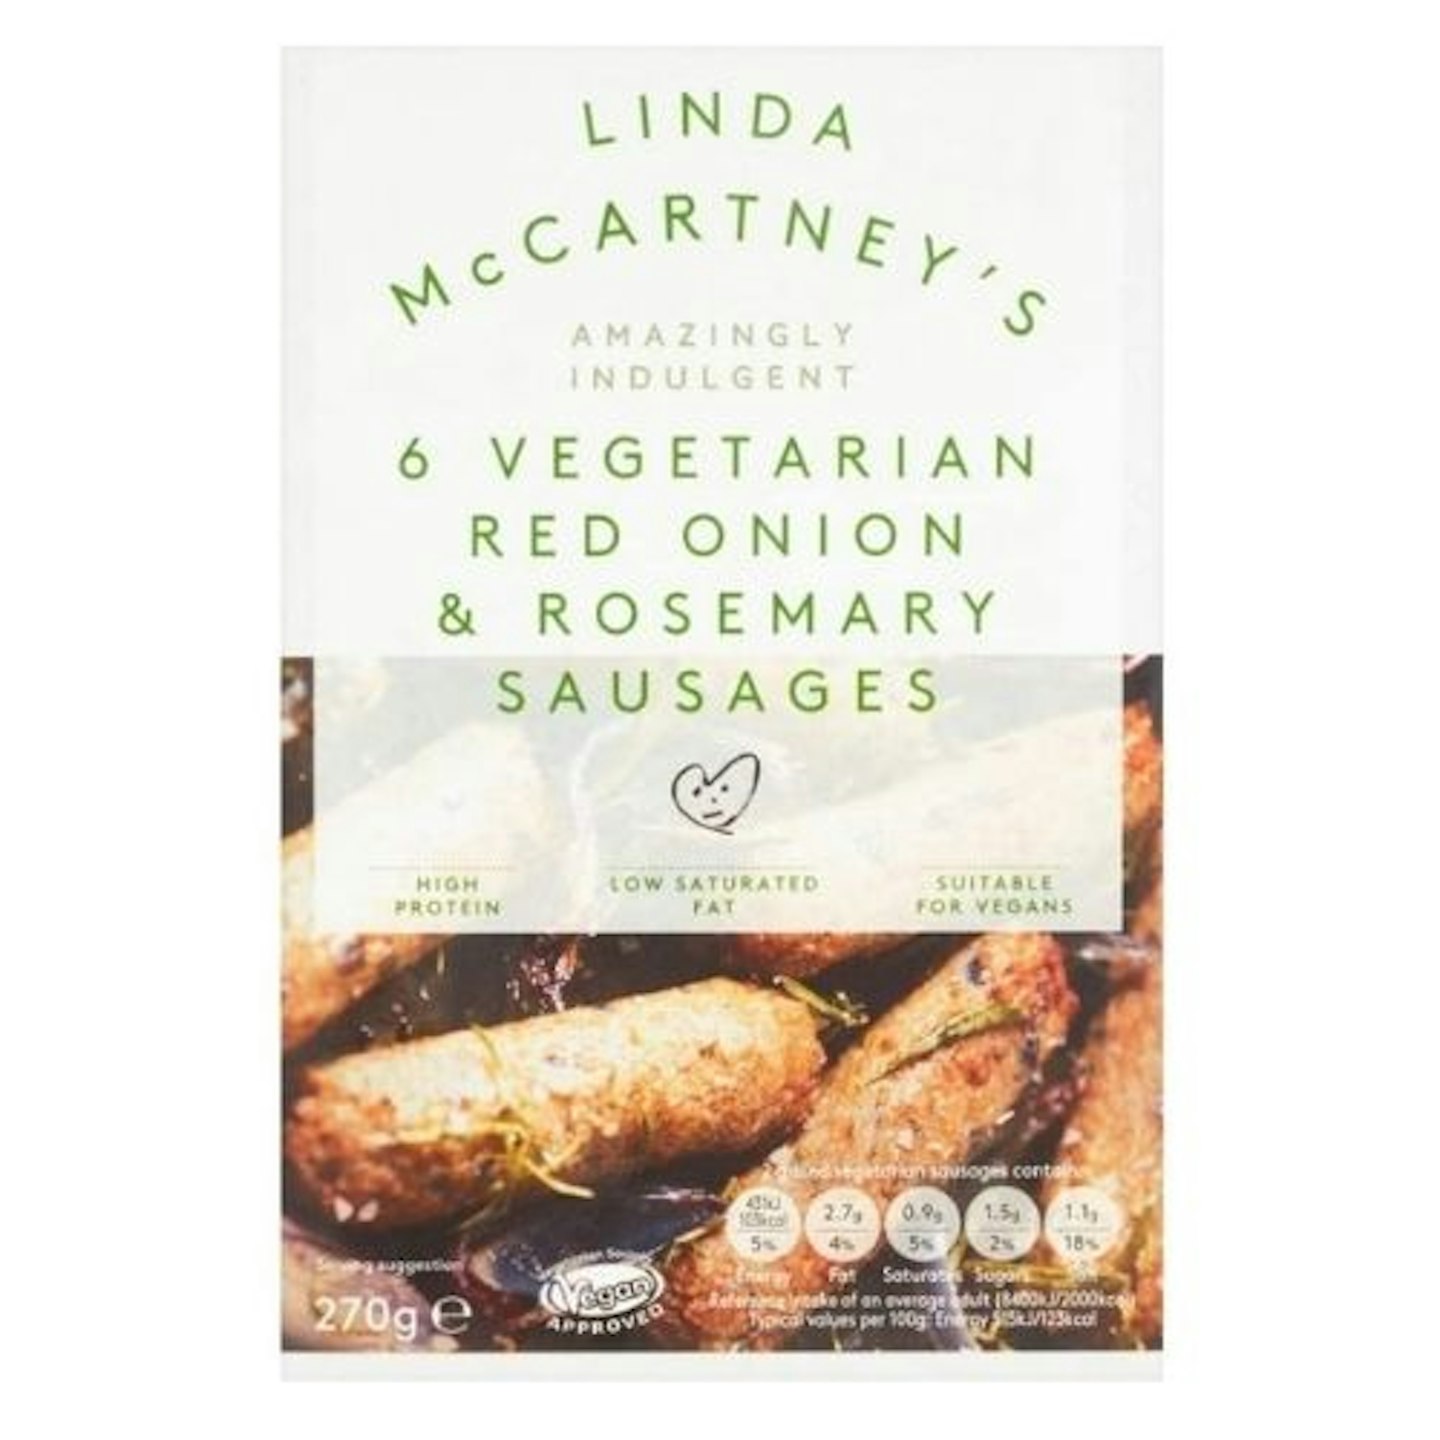 Linda McCartney's Vegetarian Red Onion & Rosemary Sausages